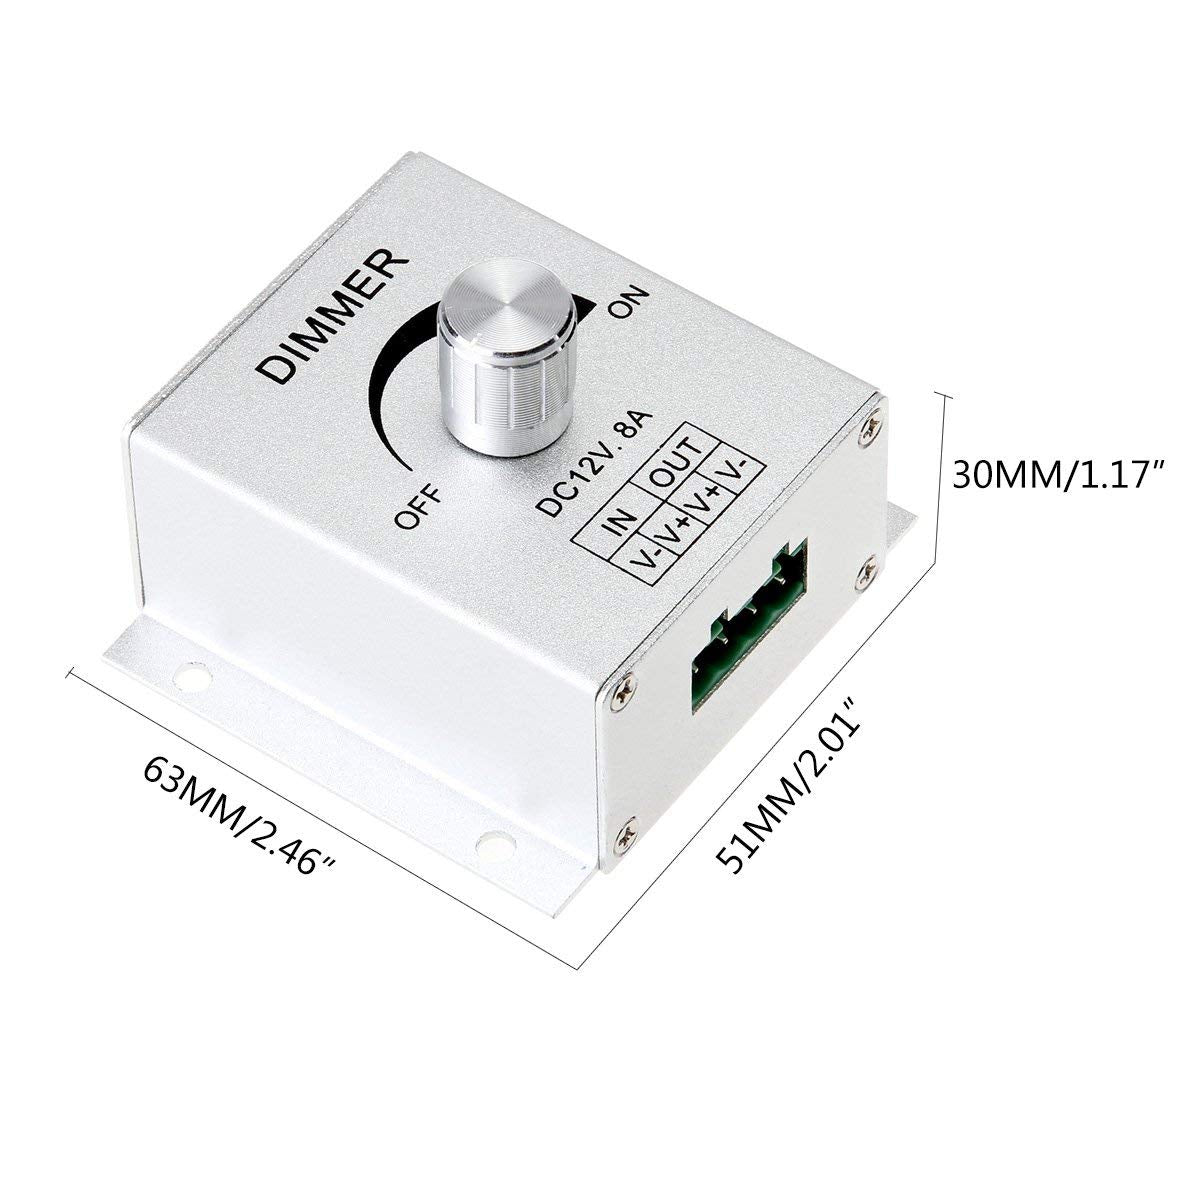 SUPERNIGHT Aluminium Case DC12V 8A Single Channel Knob Dimmer Controller For LED strip Bulb Lamp Light 5050 3528 5630 single color LED Strip